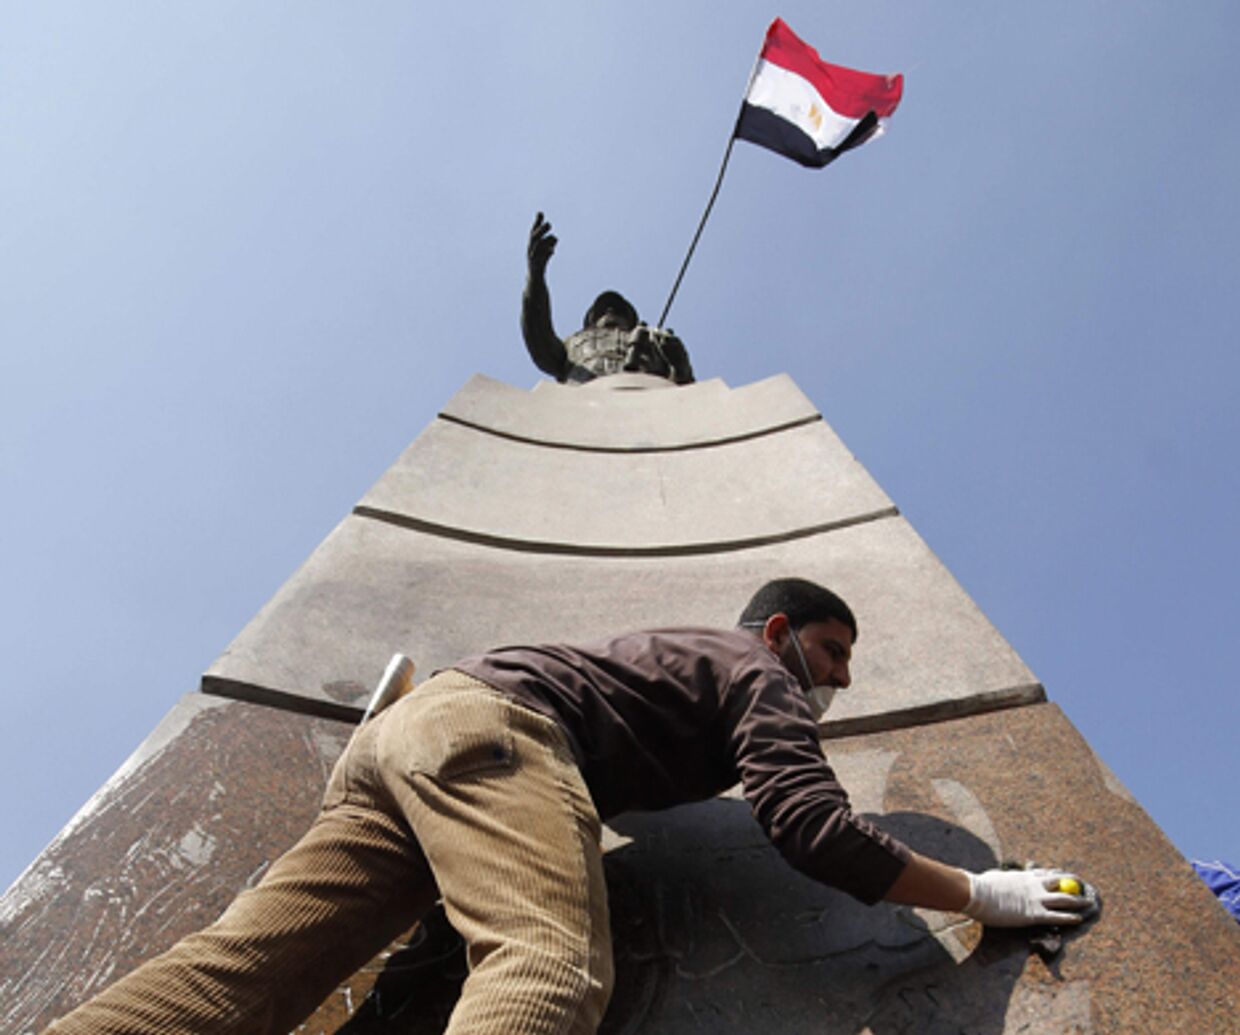 Жители Каира приводят в порядок площадь Тахрир 